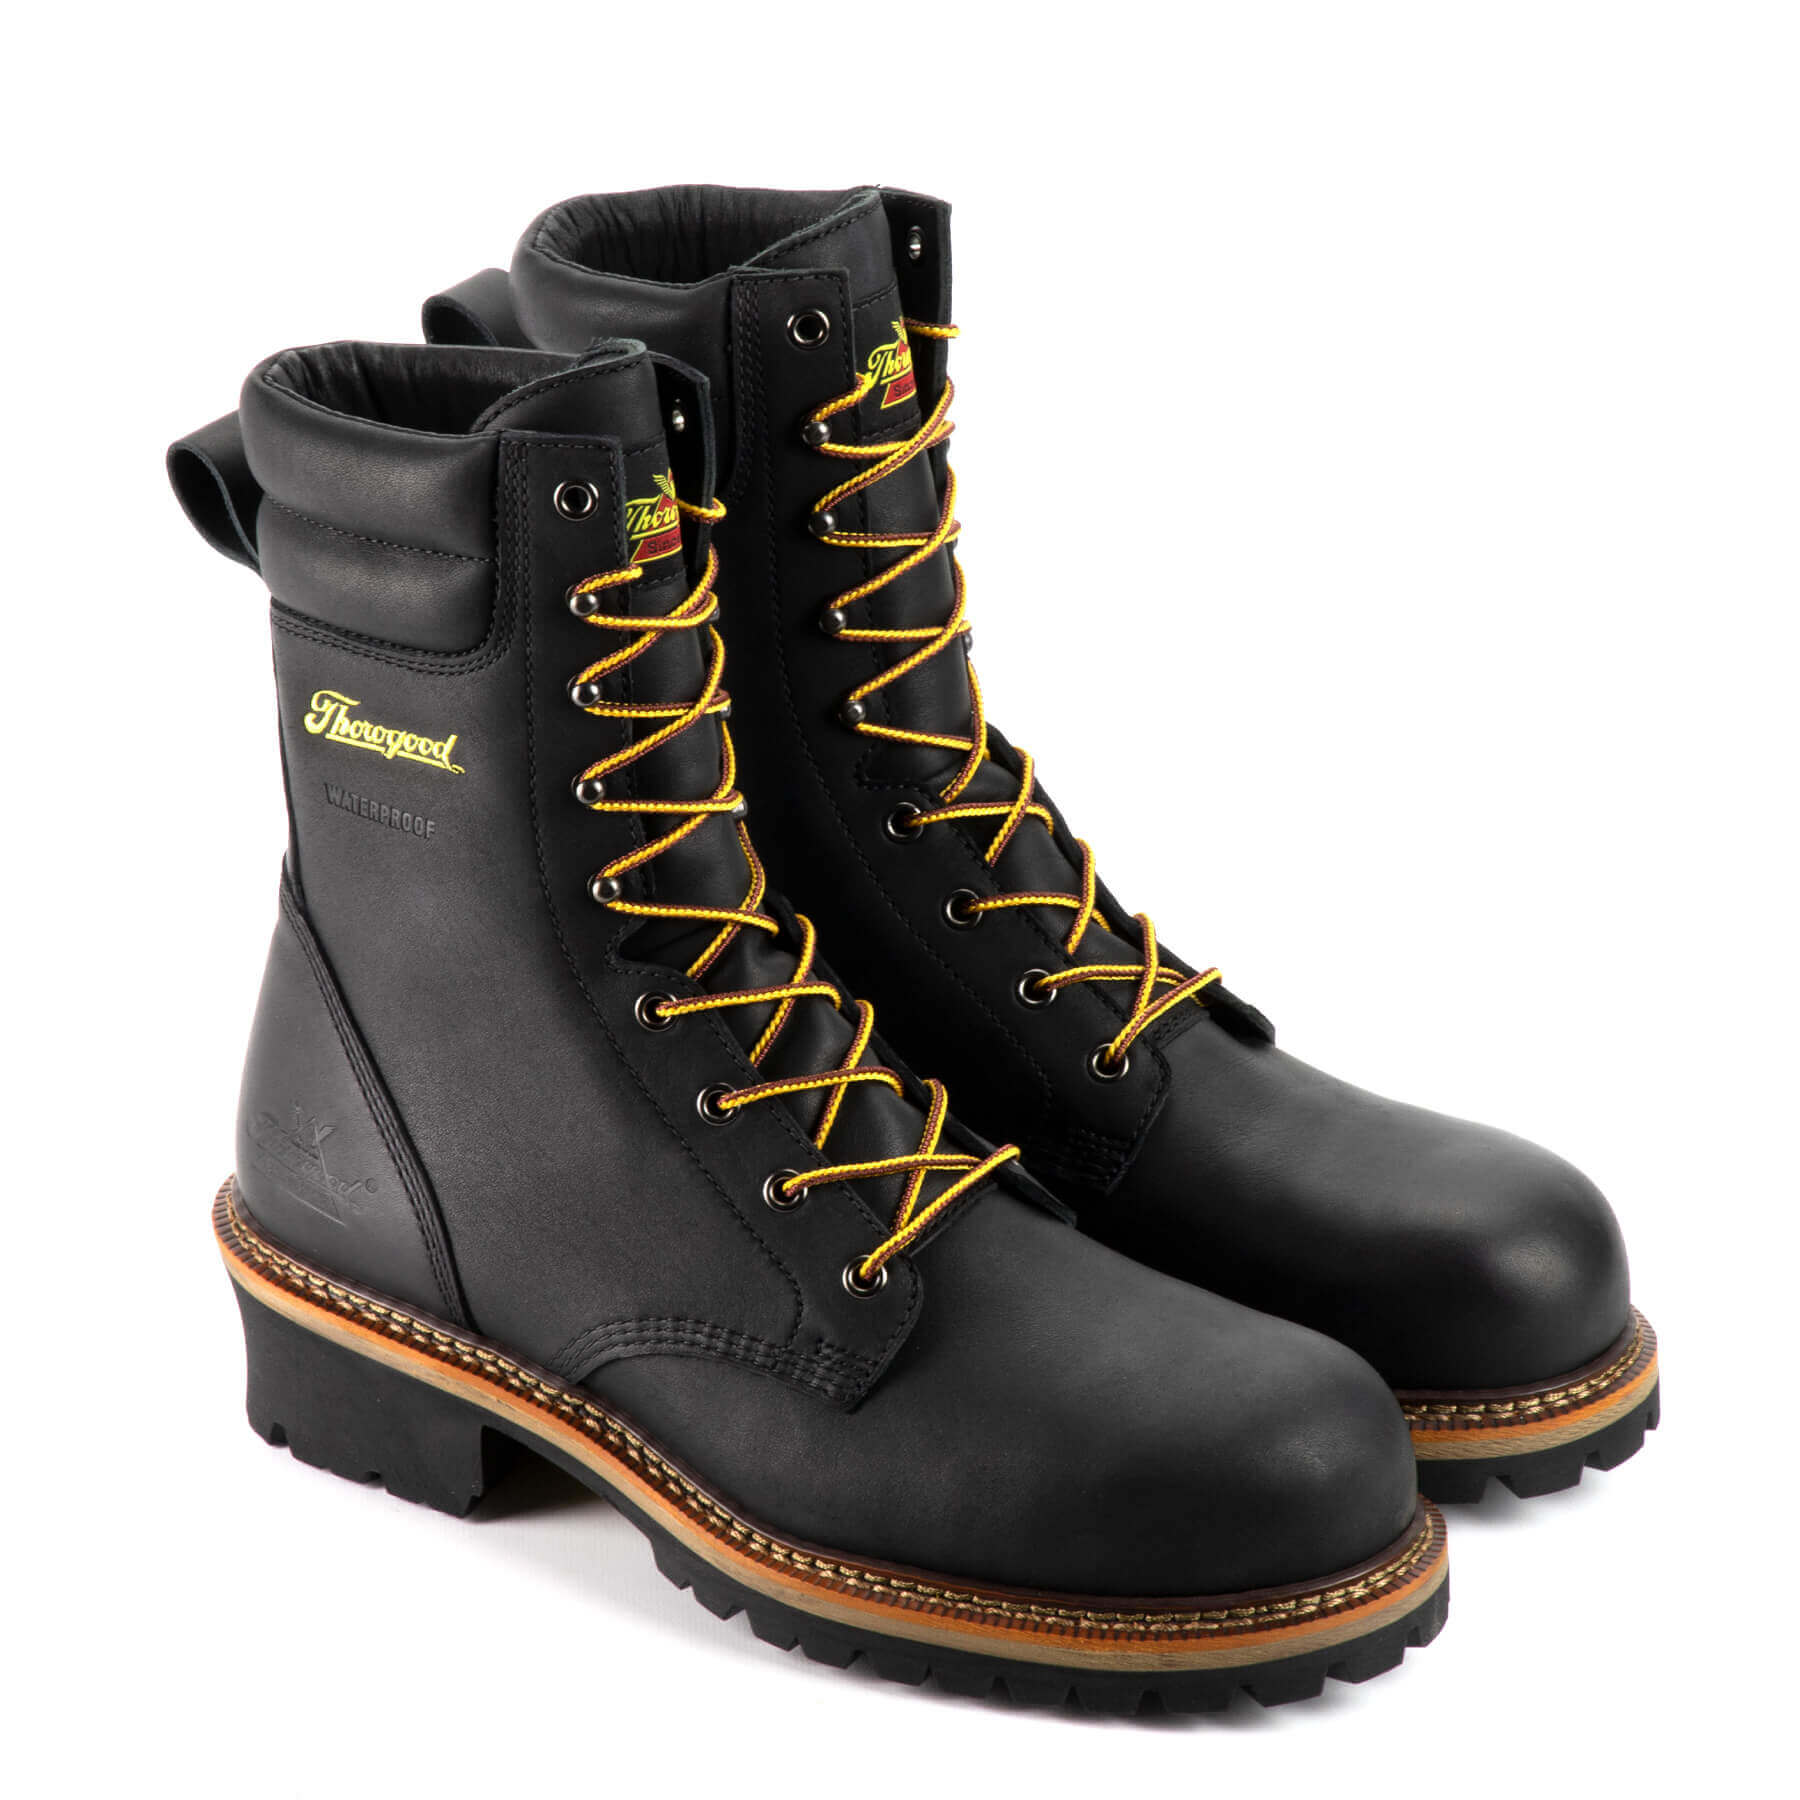 thorogood insulated waterproof boots